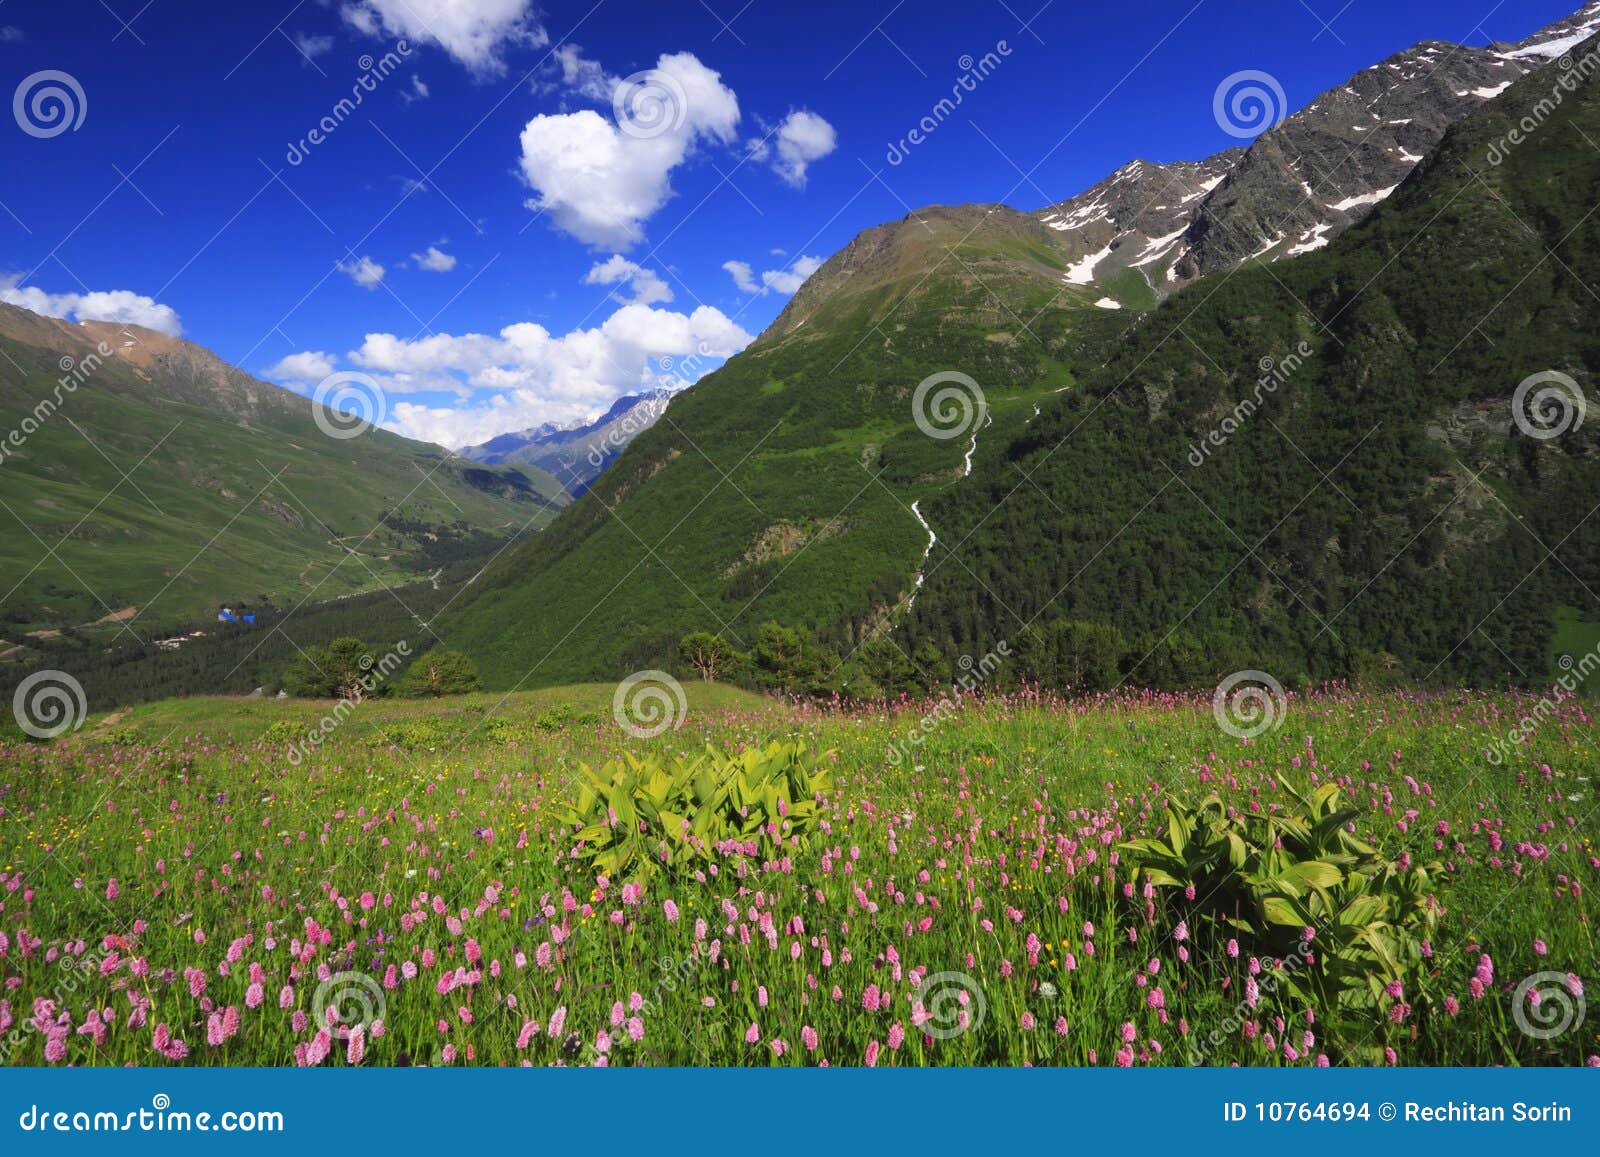 Caucasus Flowers stock photo. Image of travel, cloud - 10764694